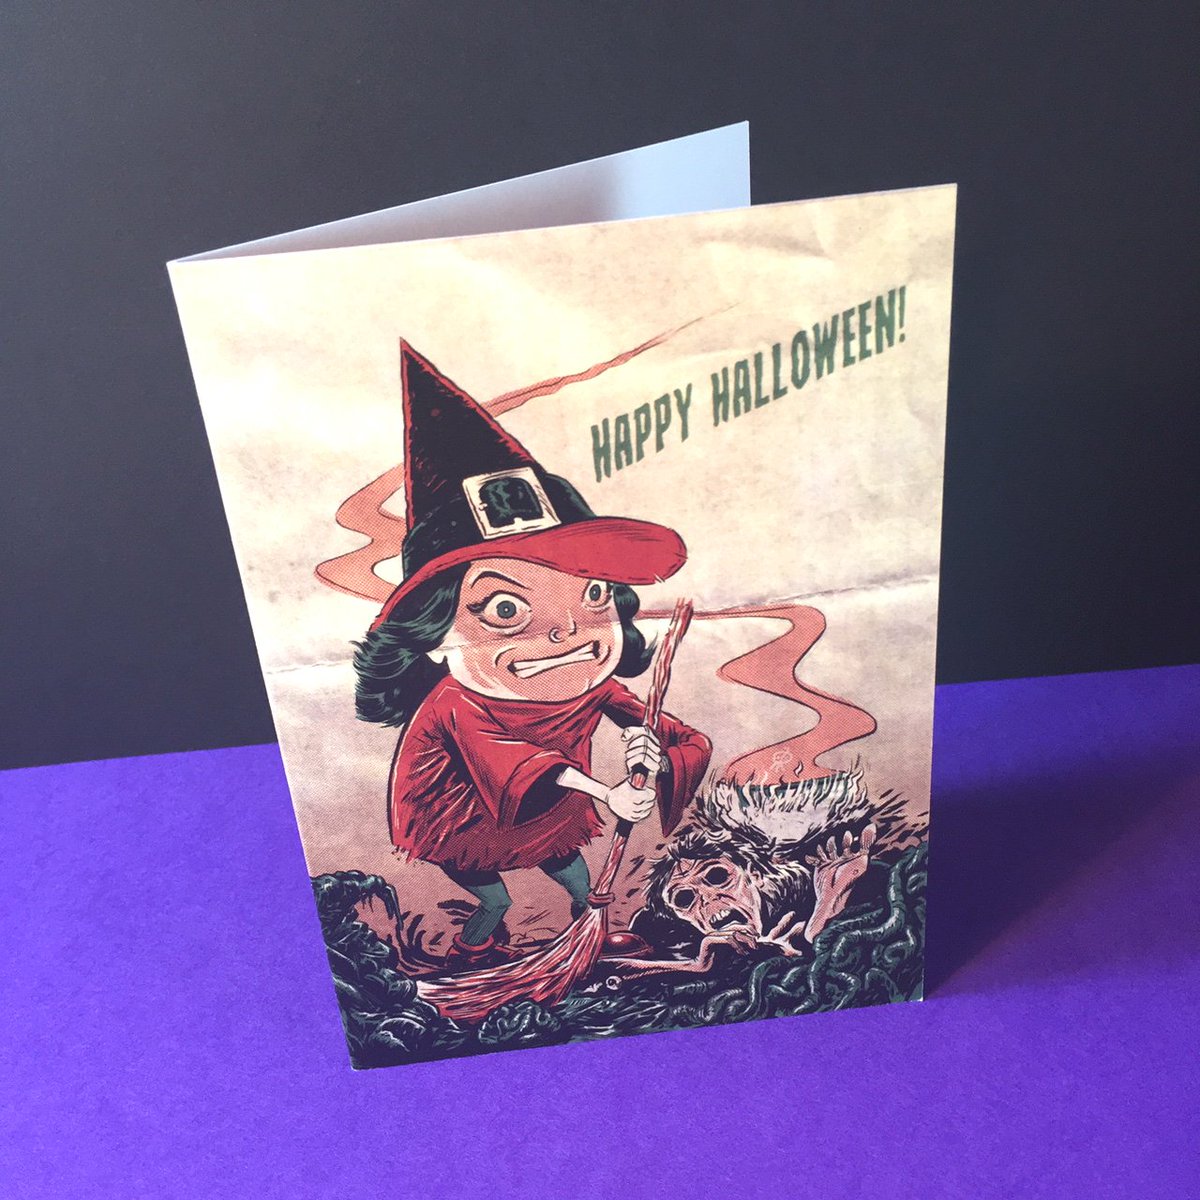 Halloween cards are available now!etsy.com/uk/shop/AstroD…
#Halloween #HalloweenCards #Samhain #AllHallowsEve #AllSaintsEve #Horror #Retro #JackOLantern #HorrorArt #HorrorIllustration #Scarecrow #Cats #Witches #HeadlessHorseman #Elves #Pumpkins #Sheffield #SheffieldIllustration